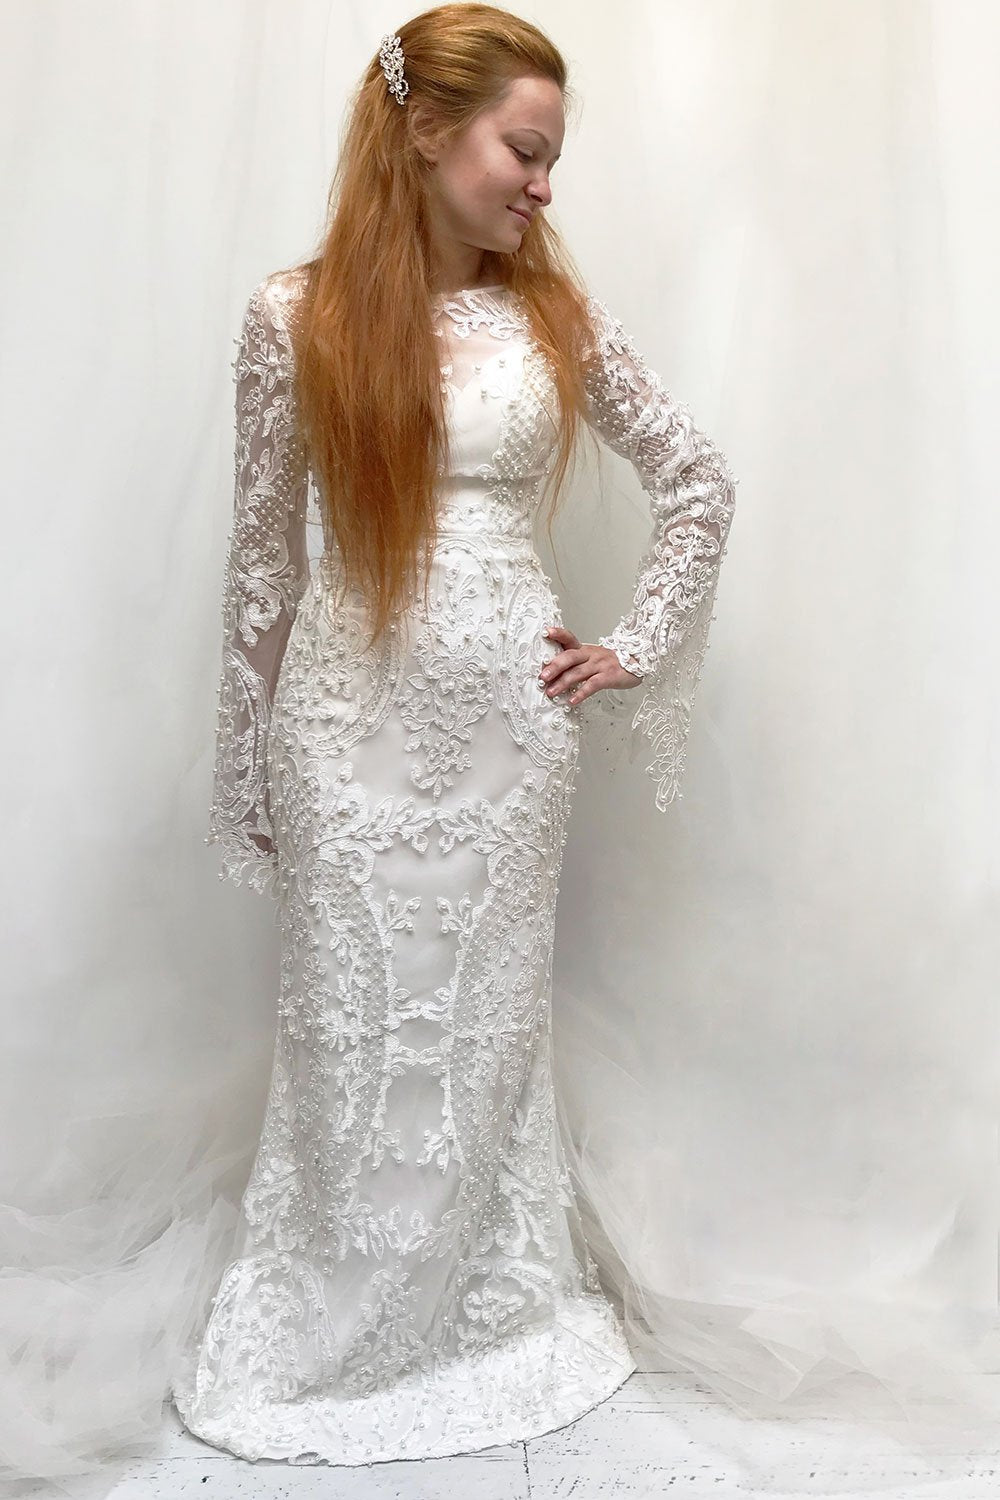 Giovana White Lace Mermaid Bridal Dress | Boudoir 1861